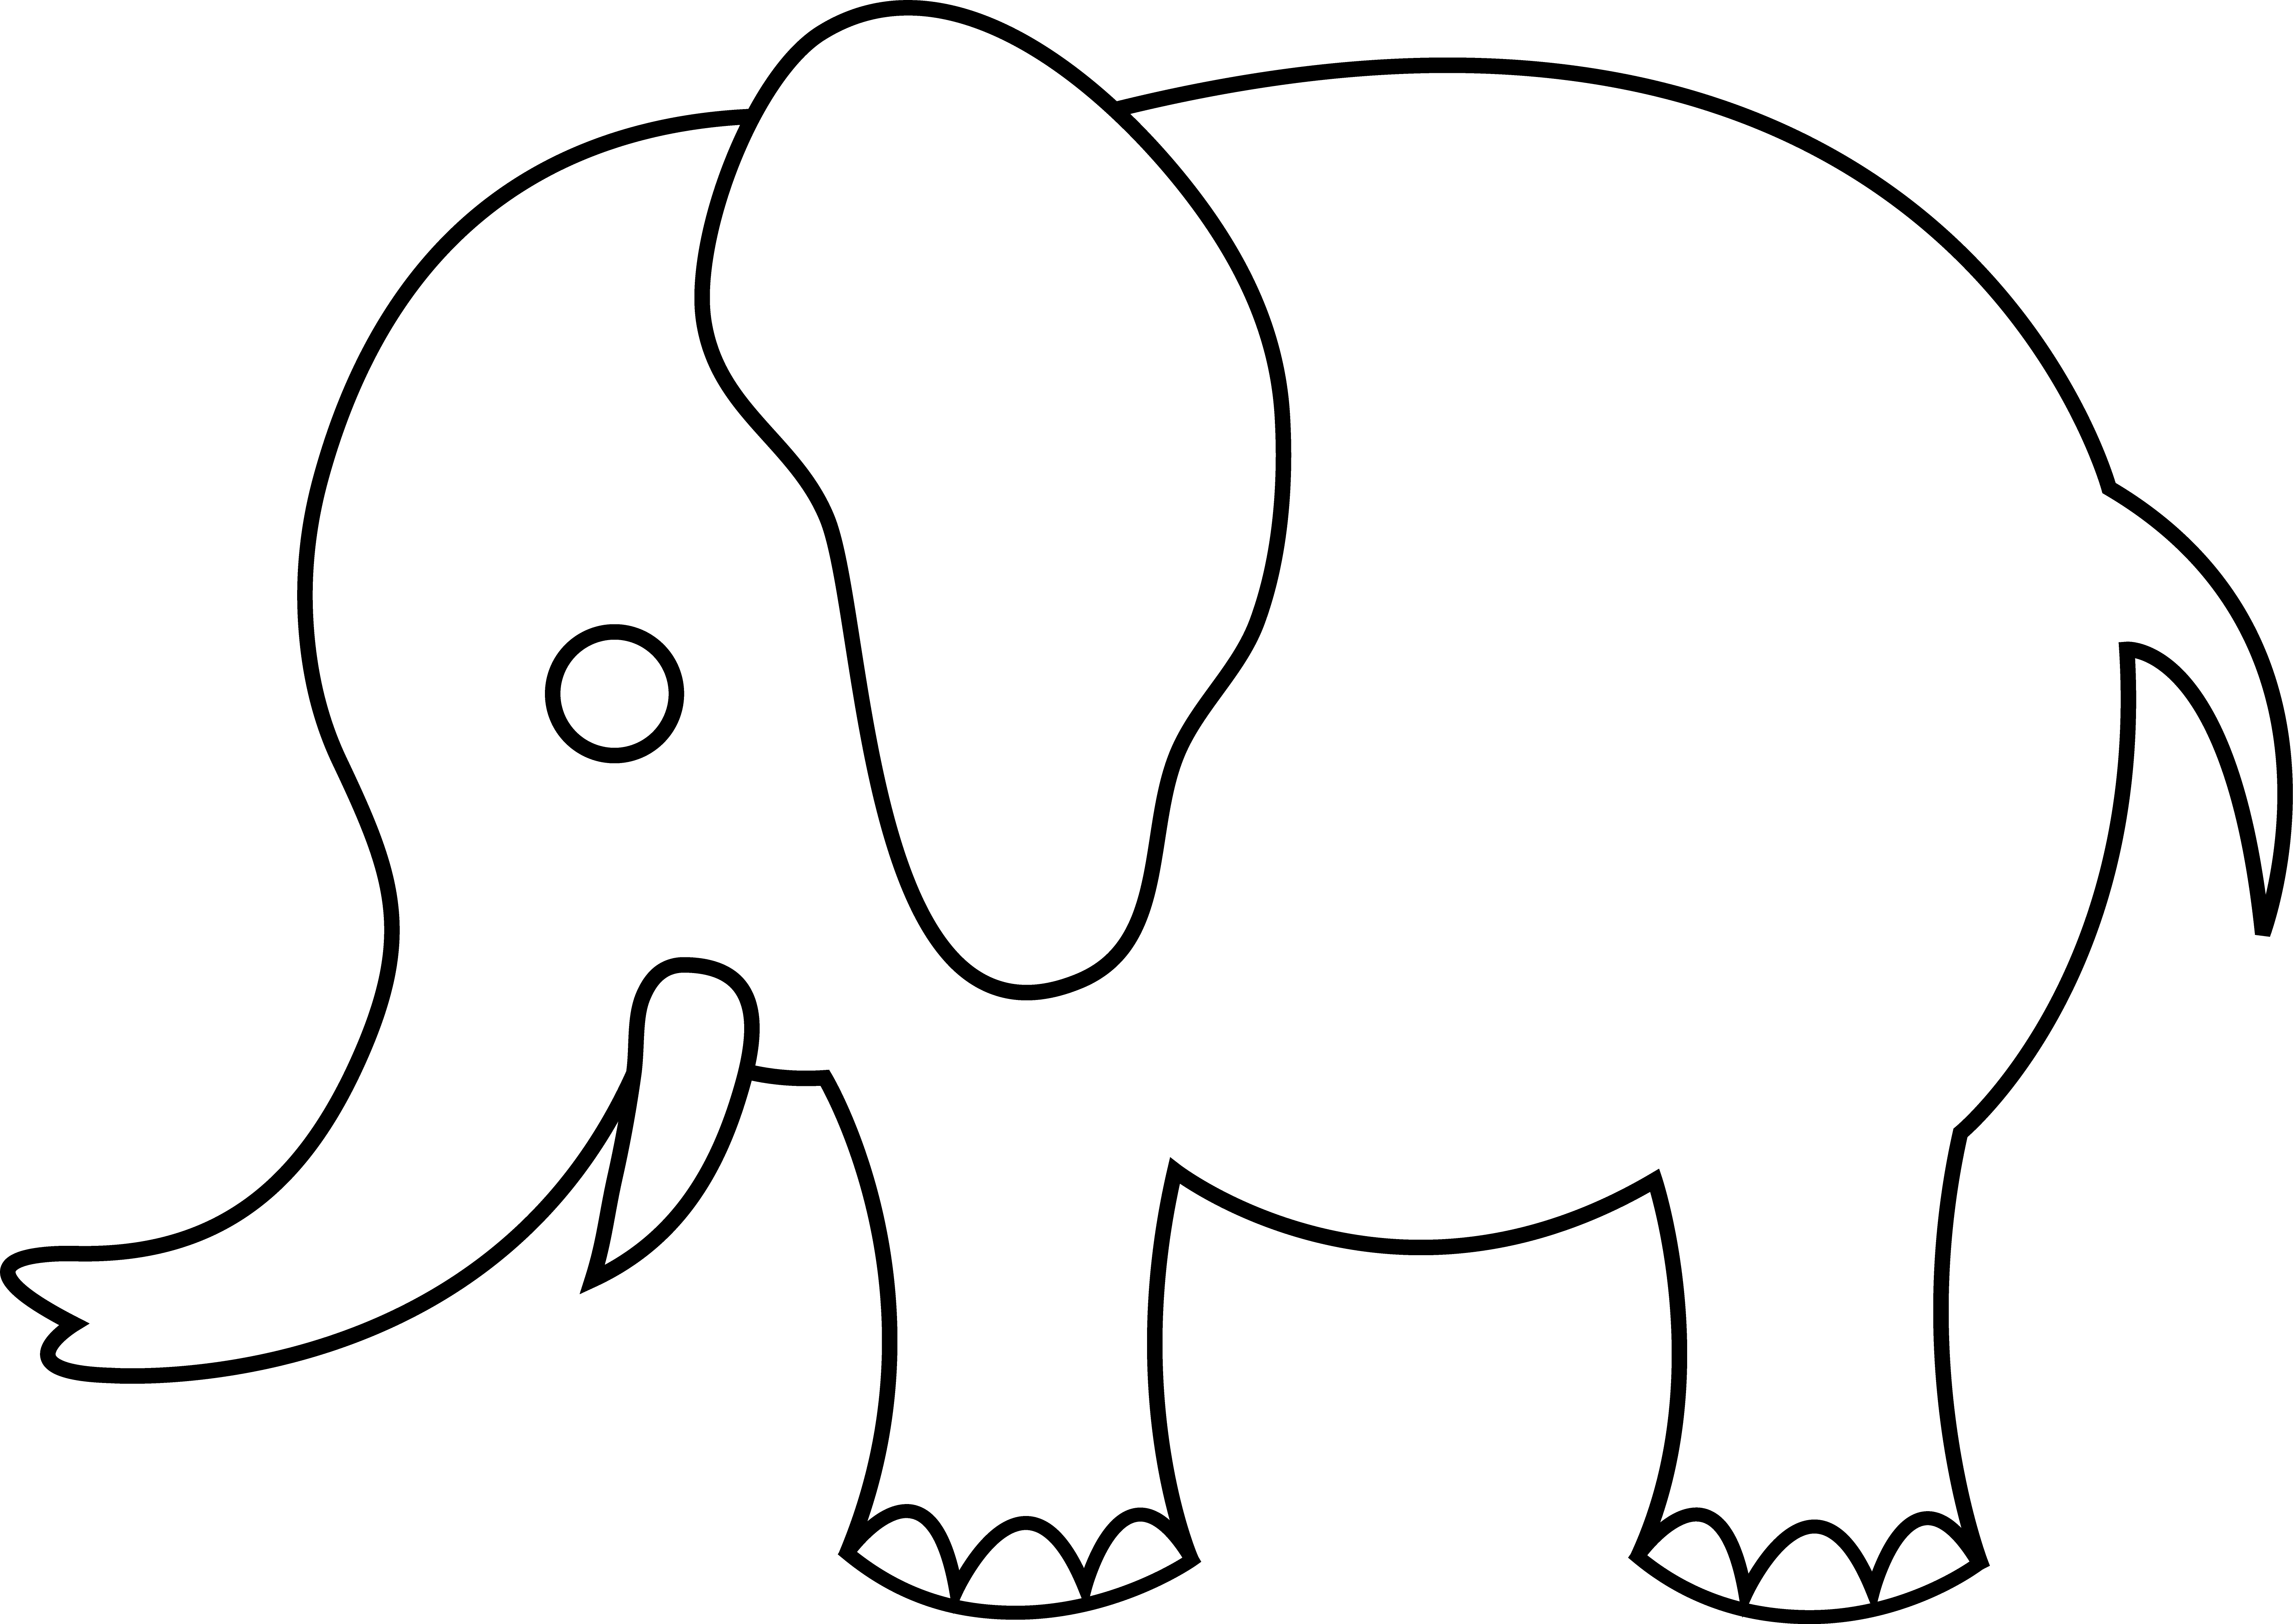 Free elephant outline.